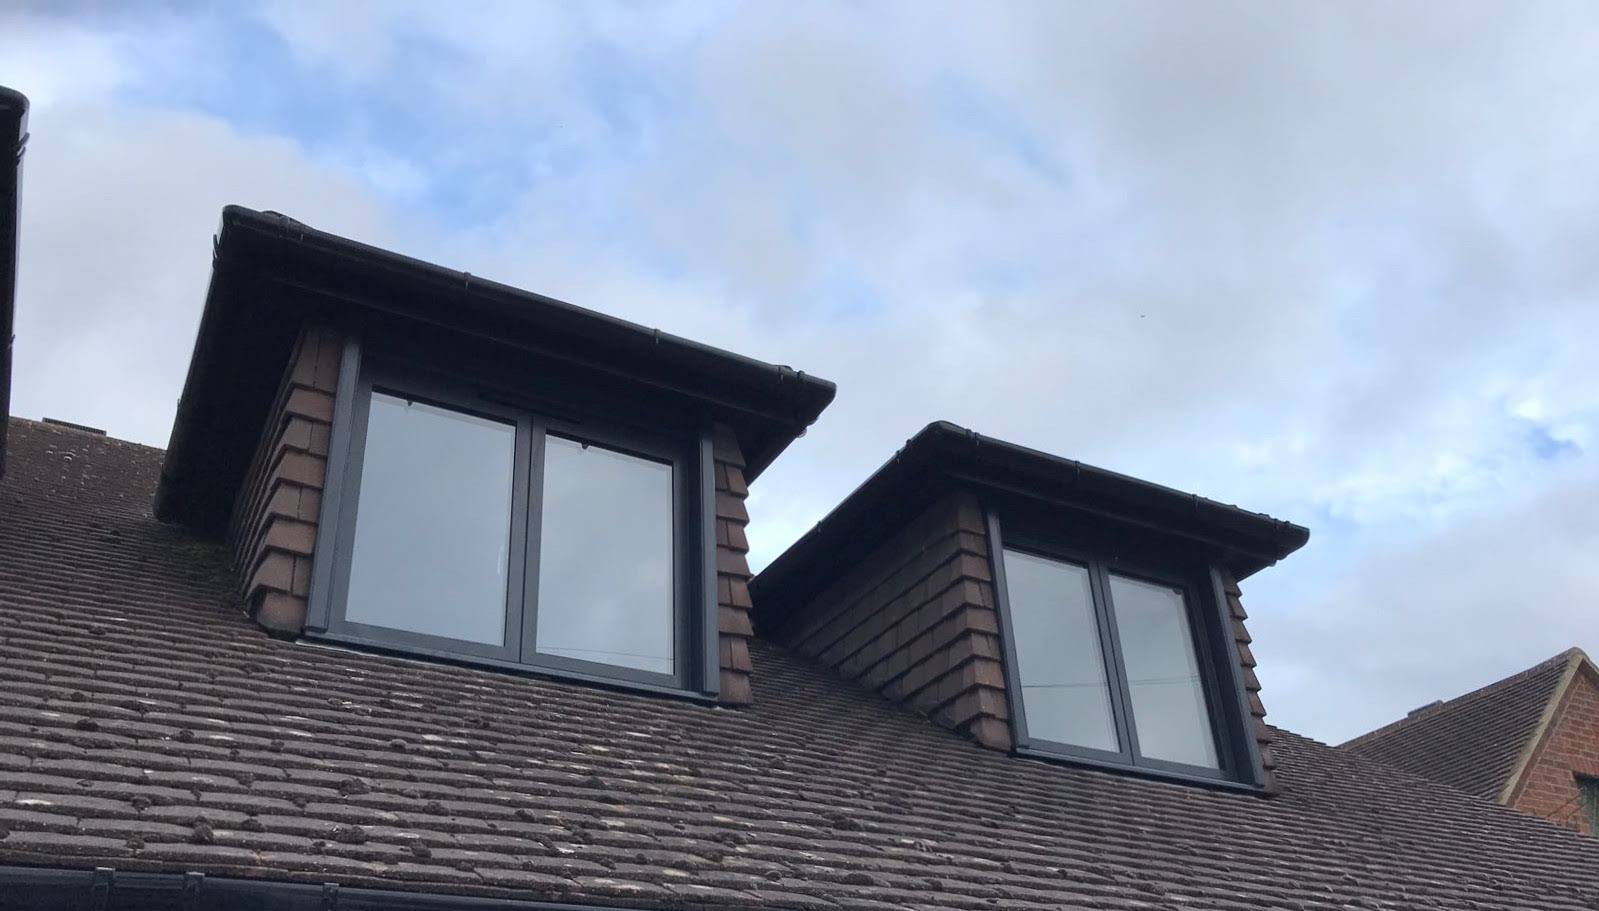 Image of two aluminium windows illuminating the top floor of the house.